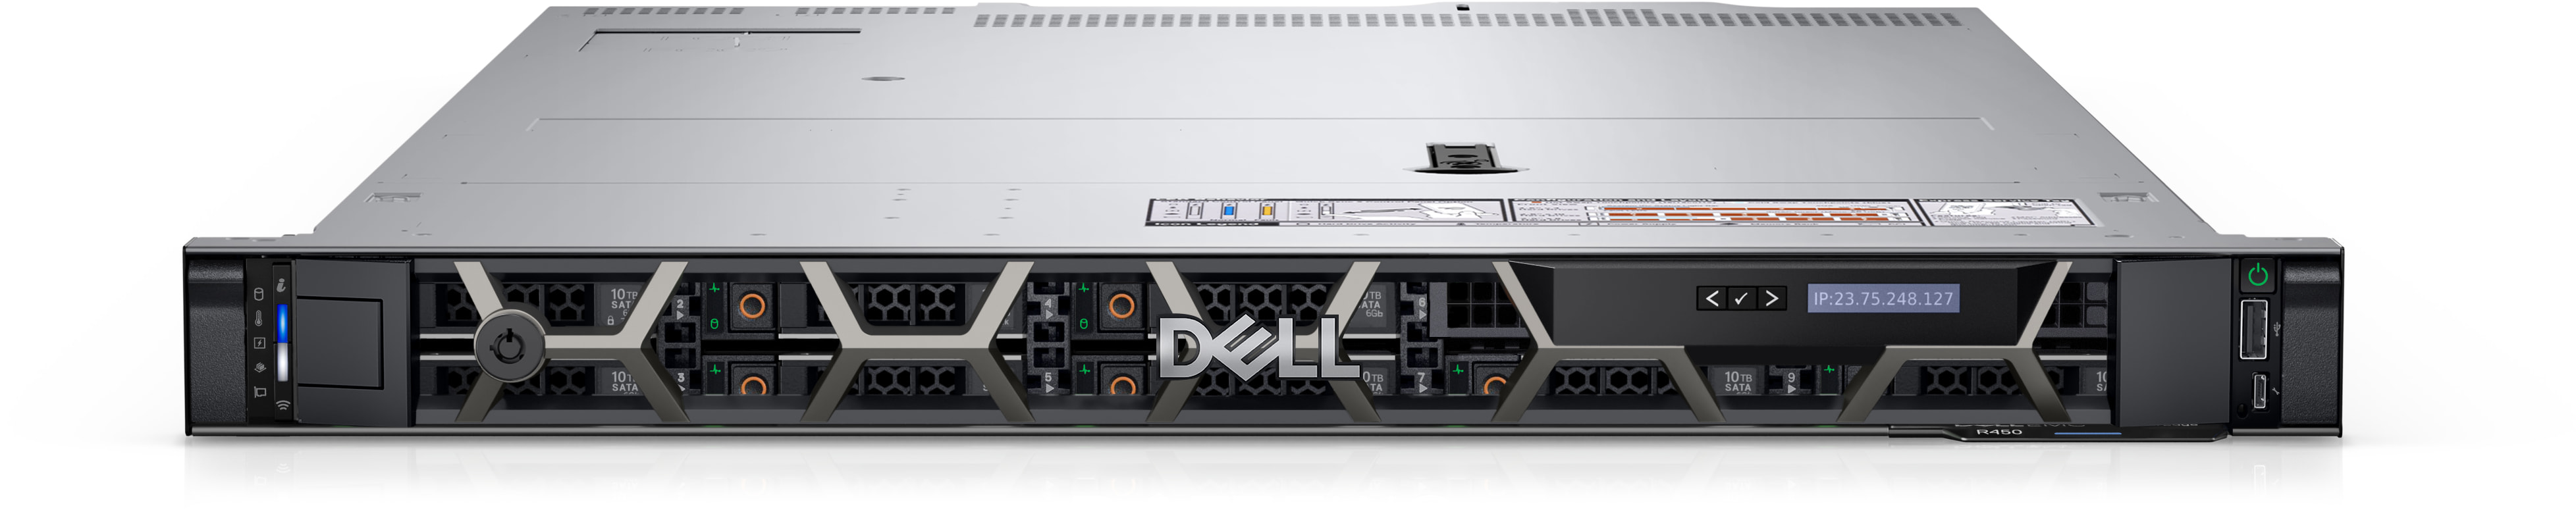 PowerEdge R450 Rack Server | Dell USA